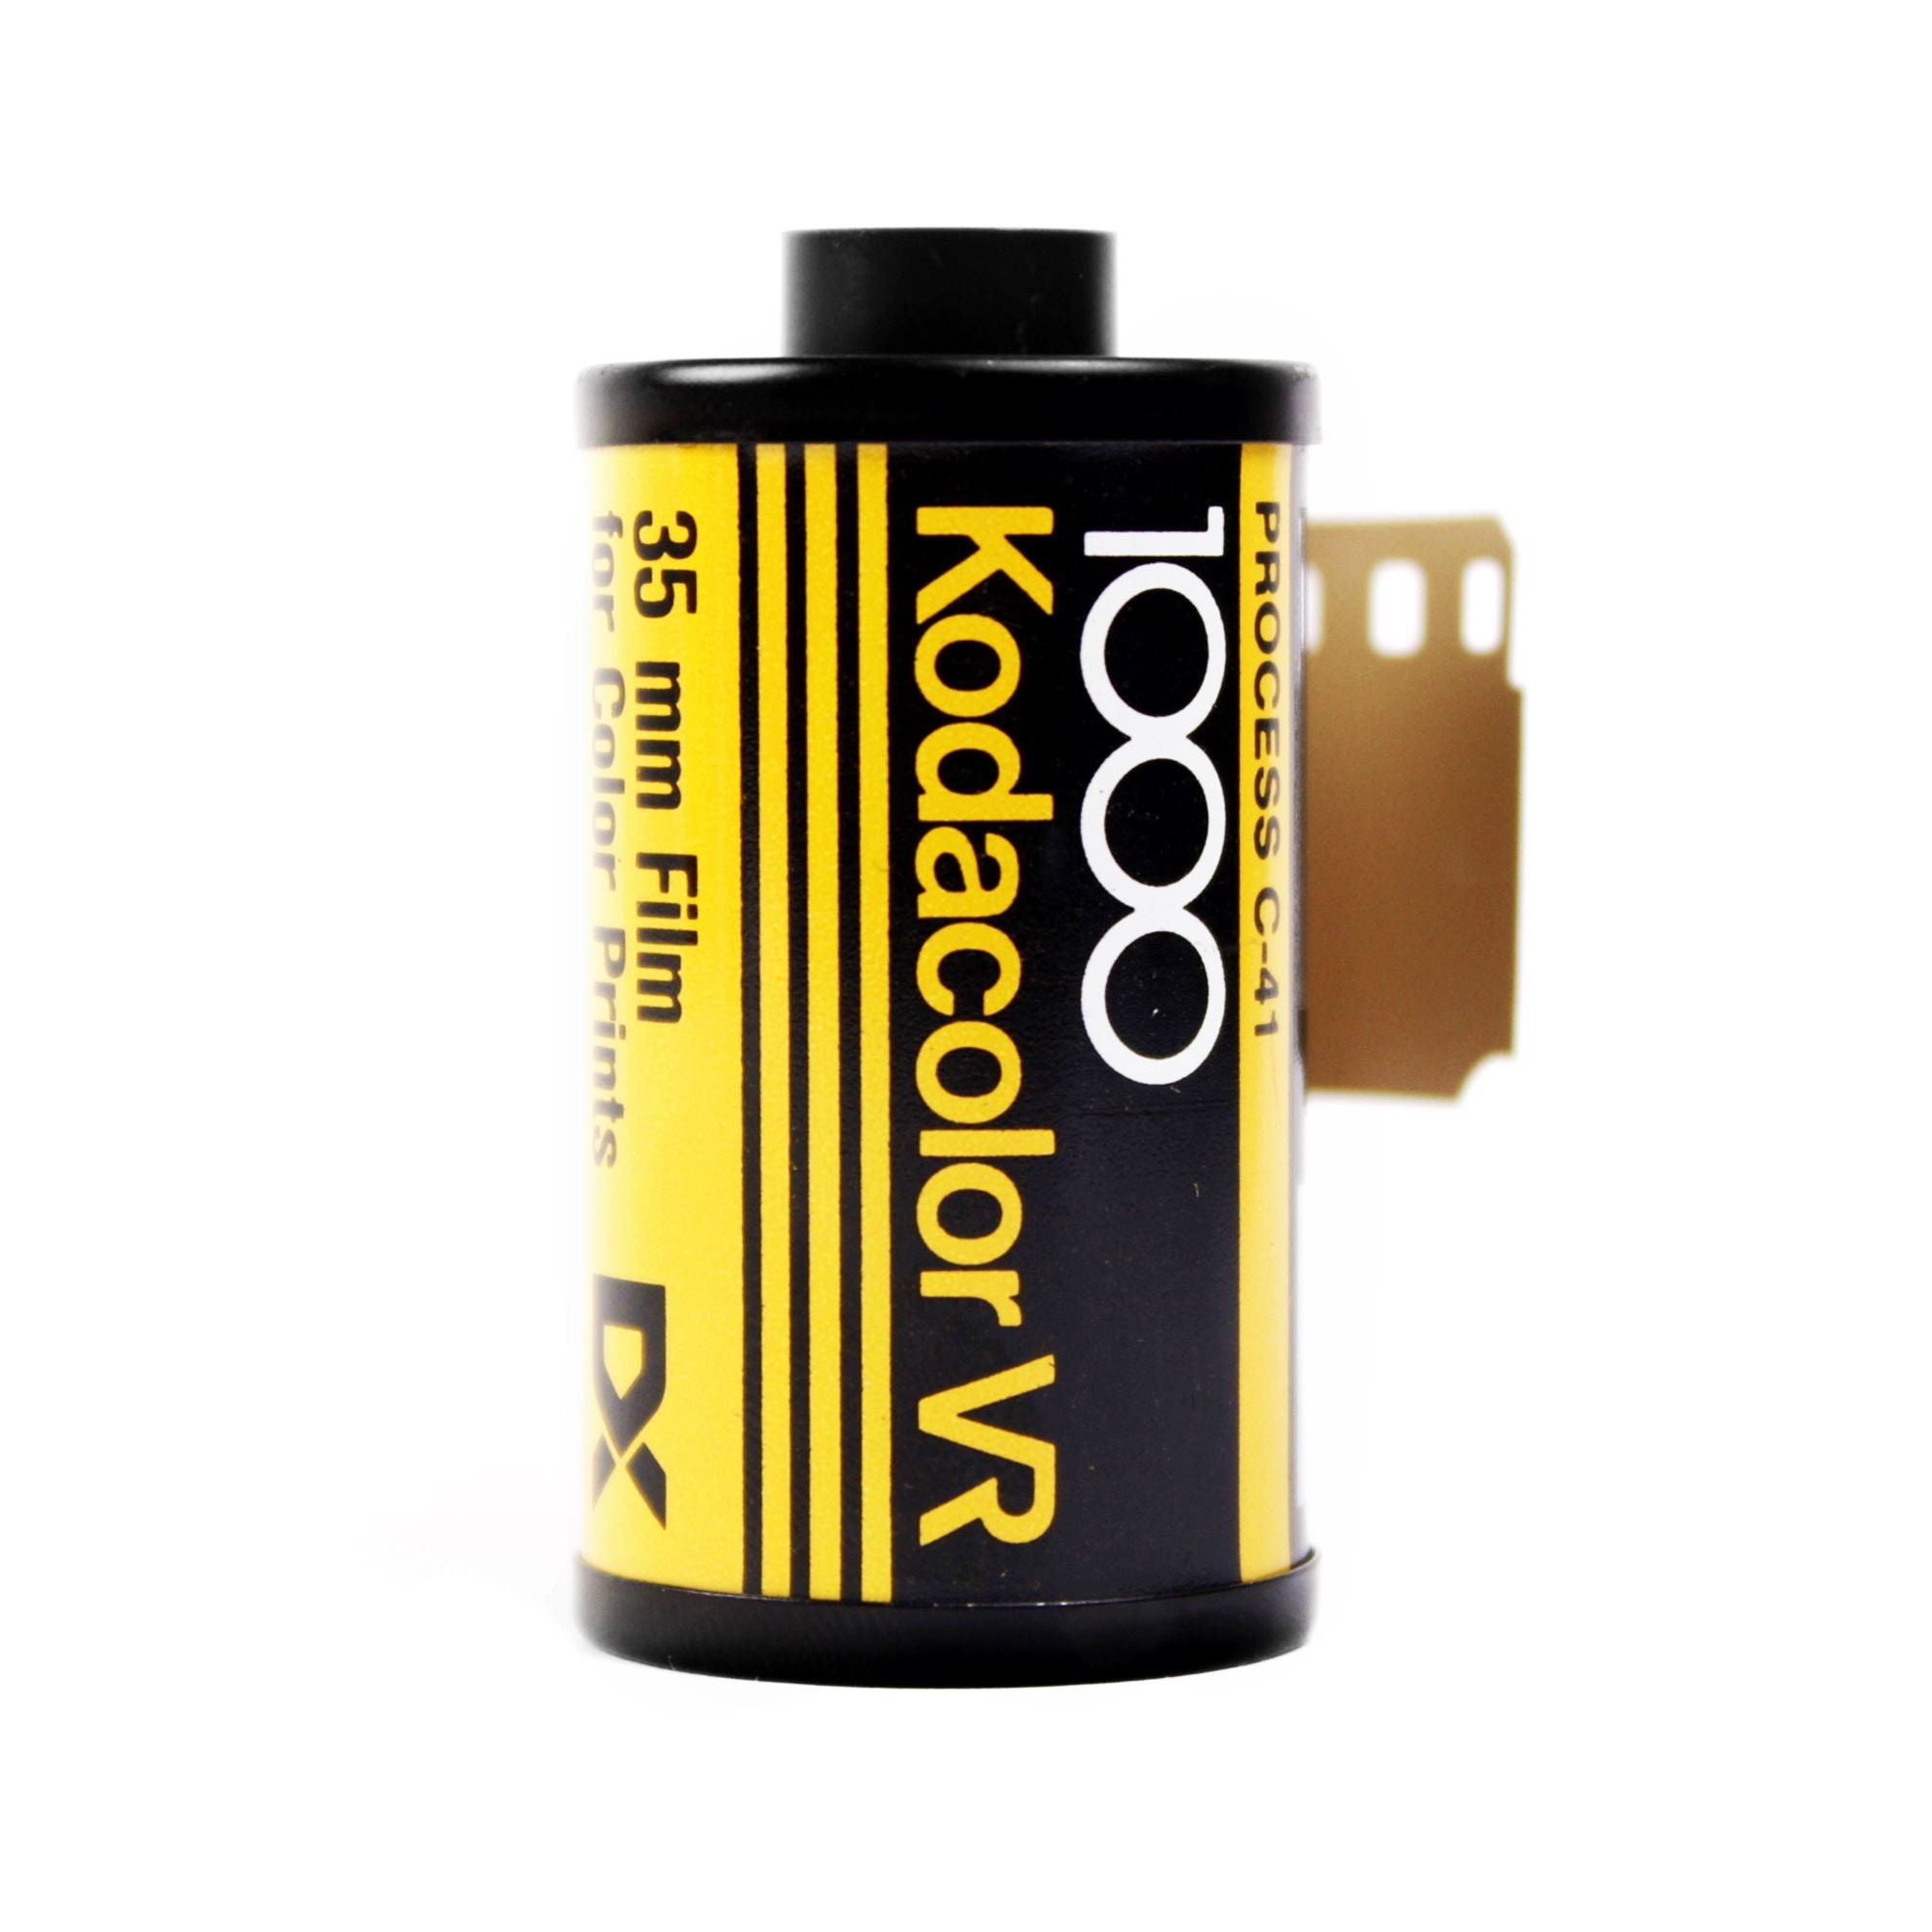 Roll of Kodak High Speed Kodacolor VR 1000 ISO Colour 35mm Film